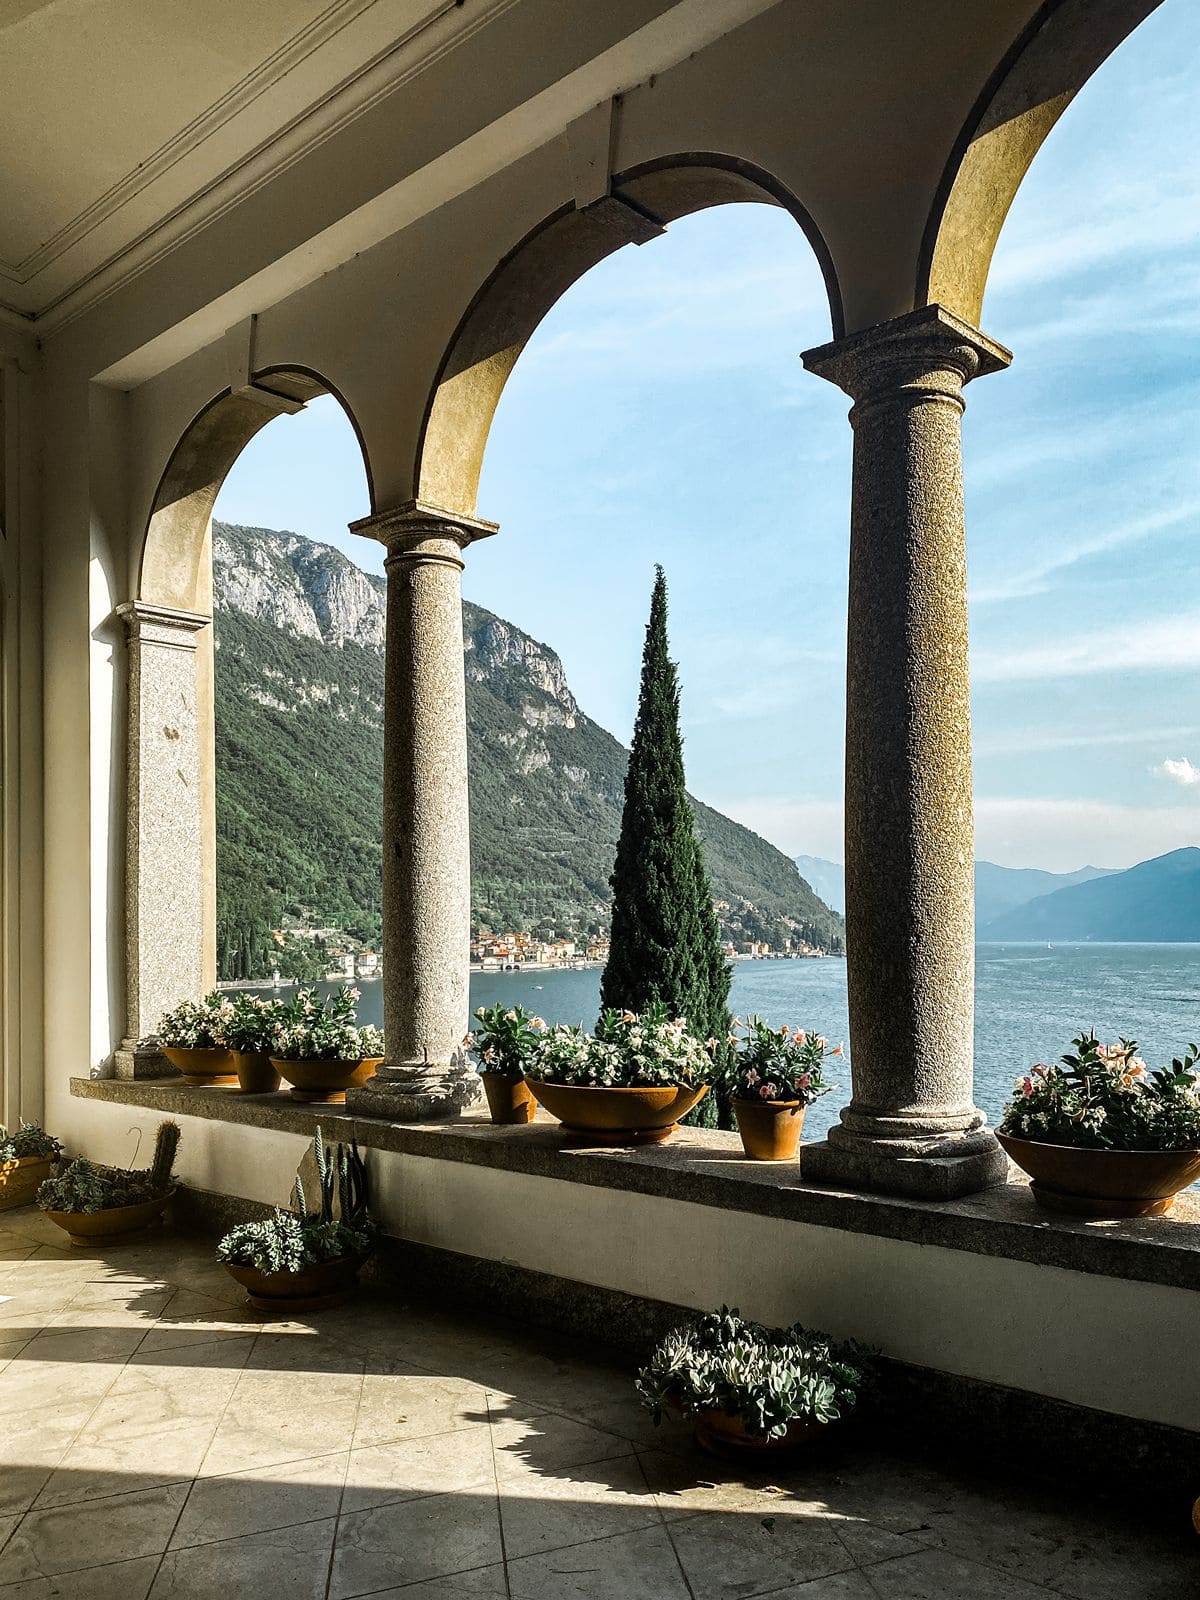 Villa Monastero pillars in Lake Como Italy